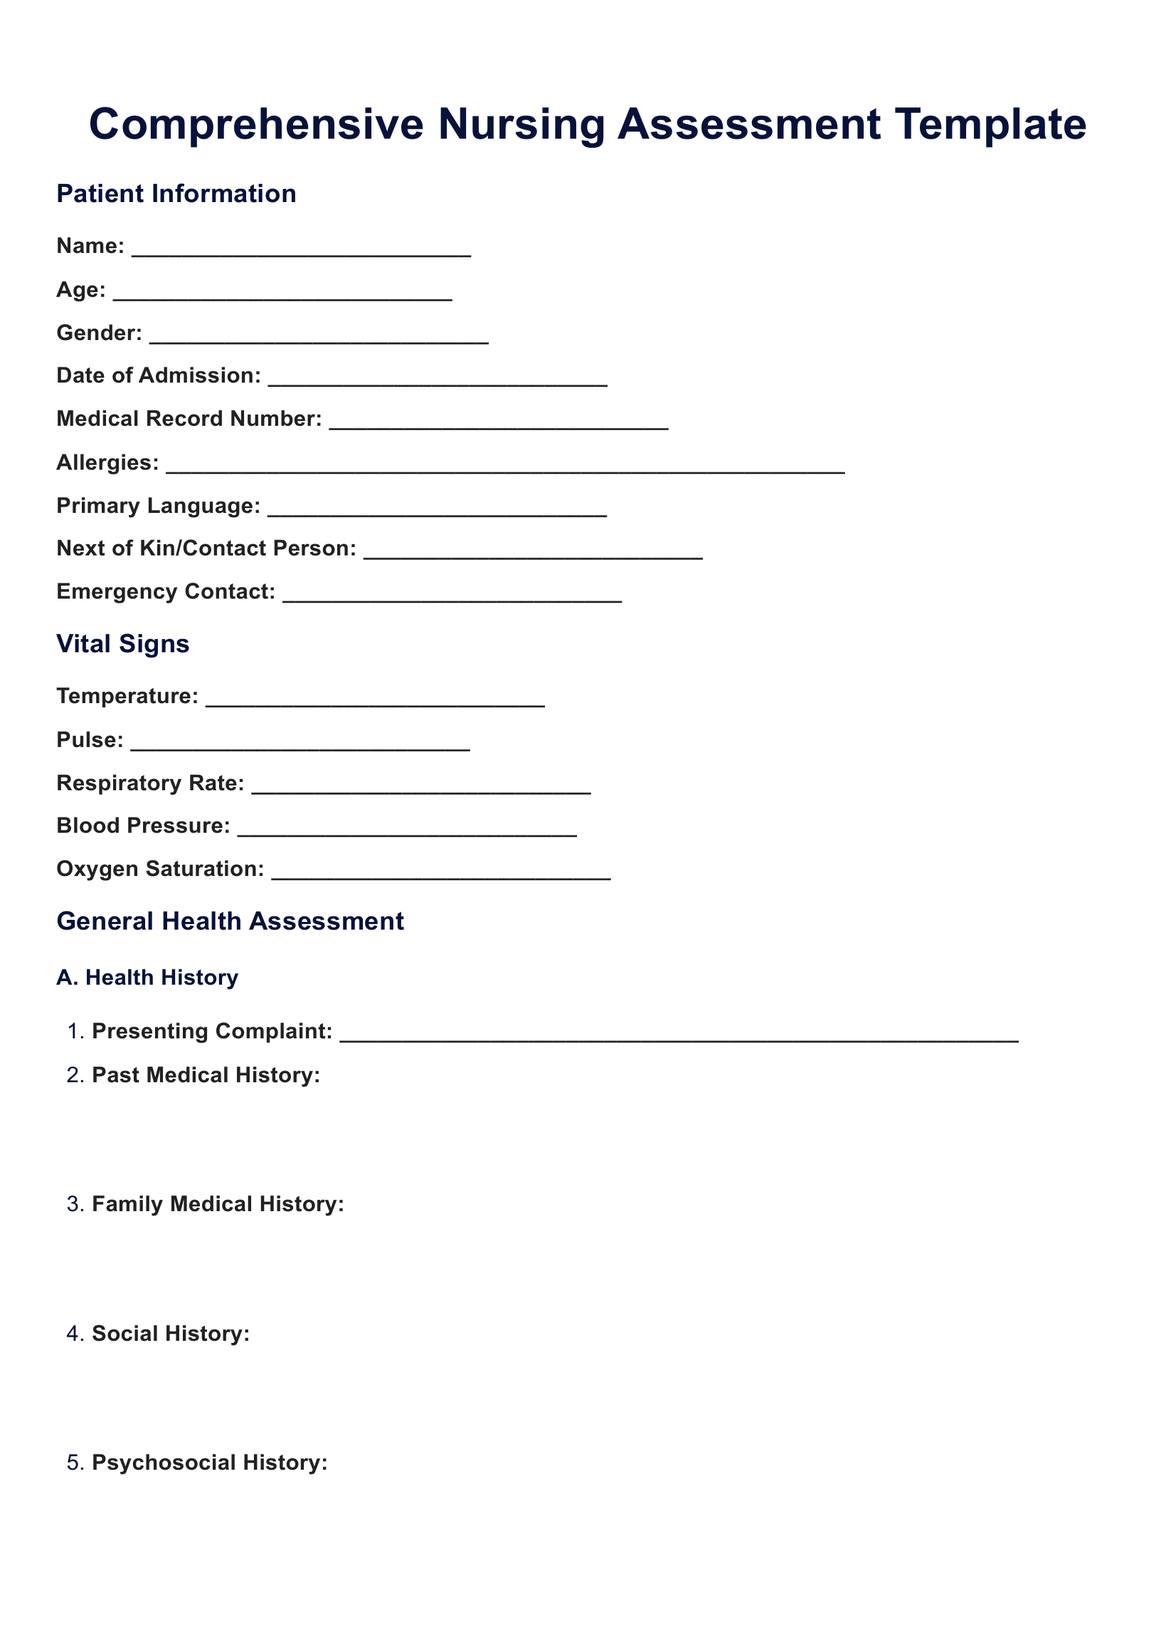 Comprehensive Health Assessments in Nursing PDF Example